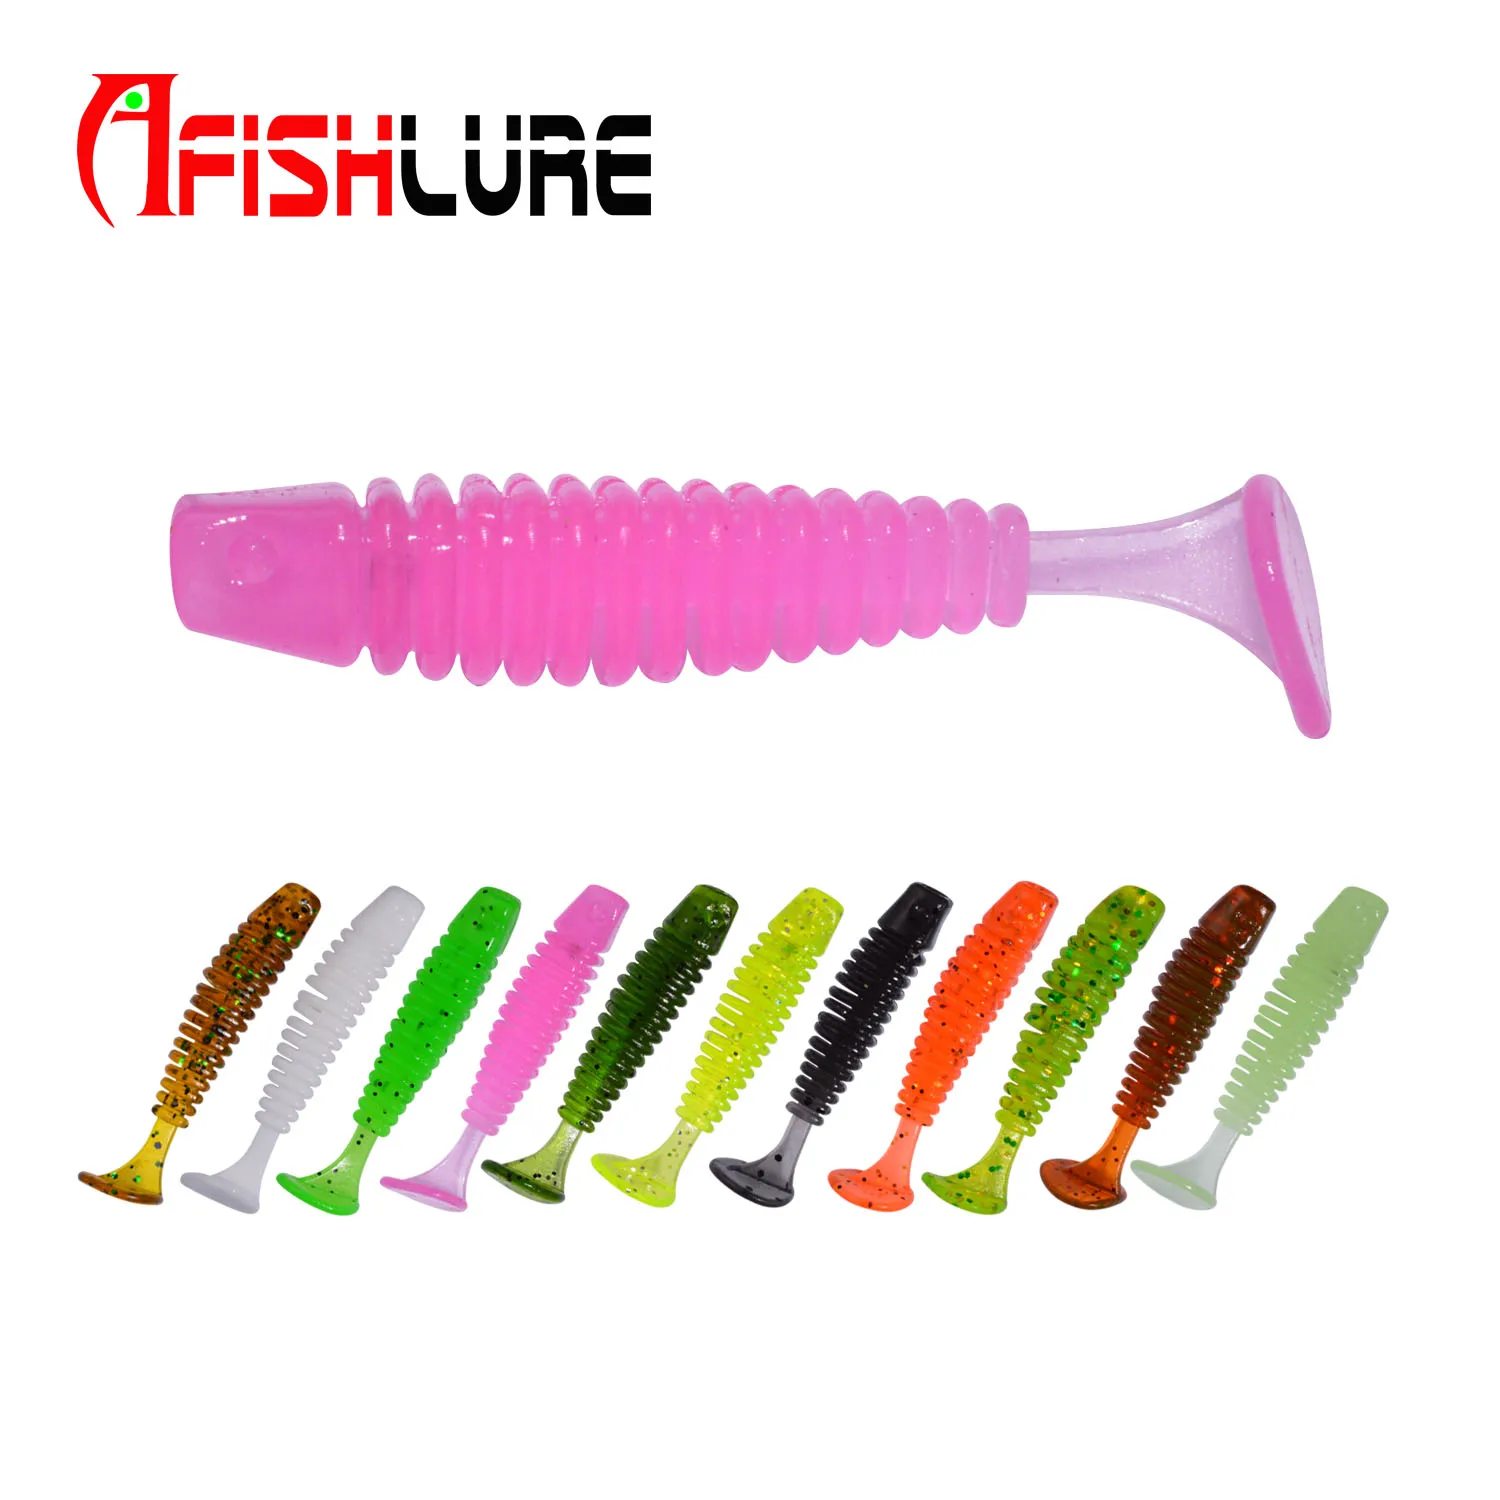 

Mini T Tail soft Bait 38mm 0.8g 20pcs SwimBait Plastic Worm Fishing Lure Small T Tail Soft Bionic Bait Lure AR66, 11 colors for choice